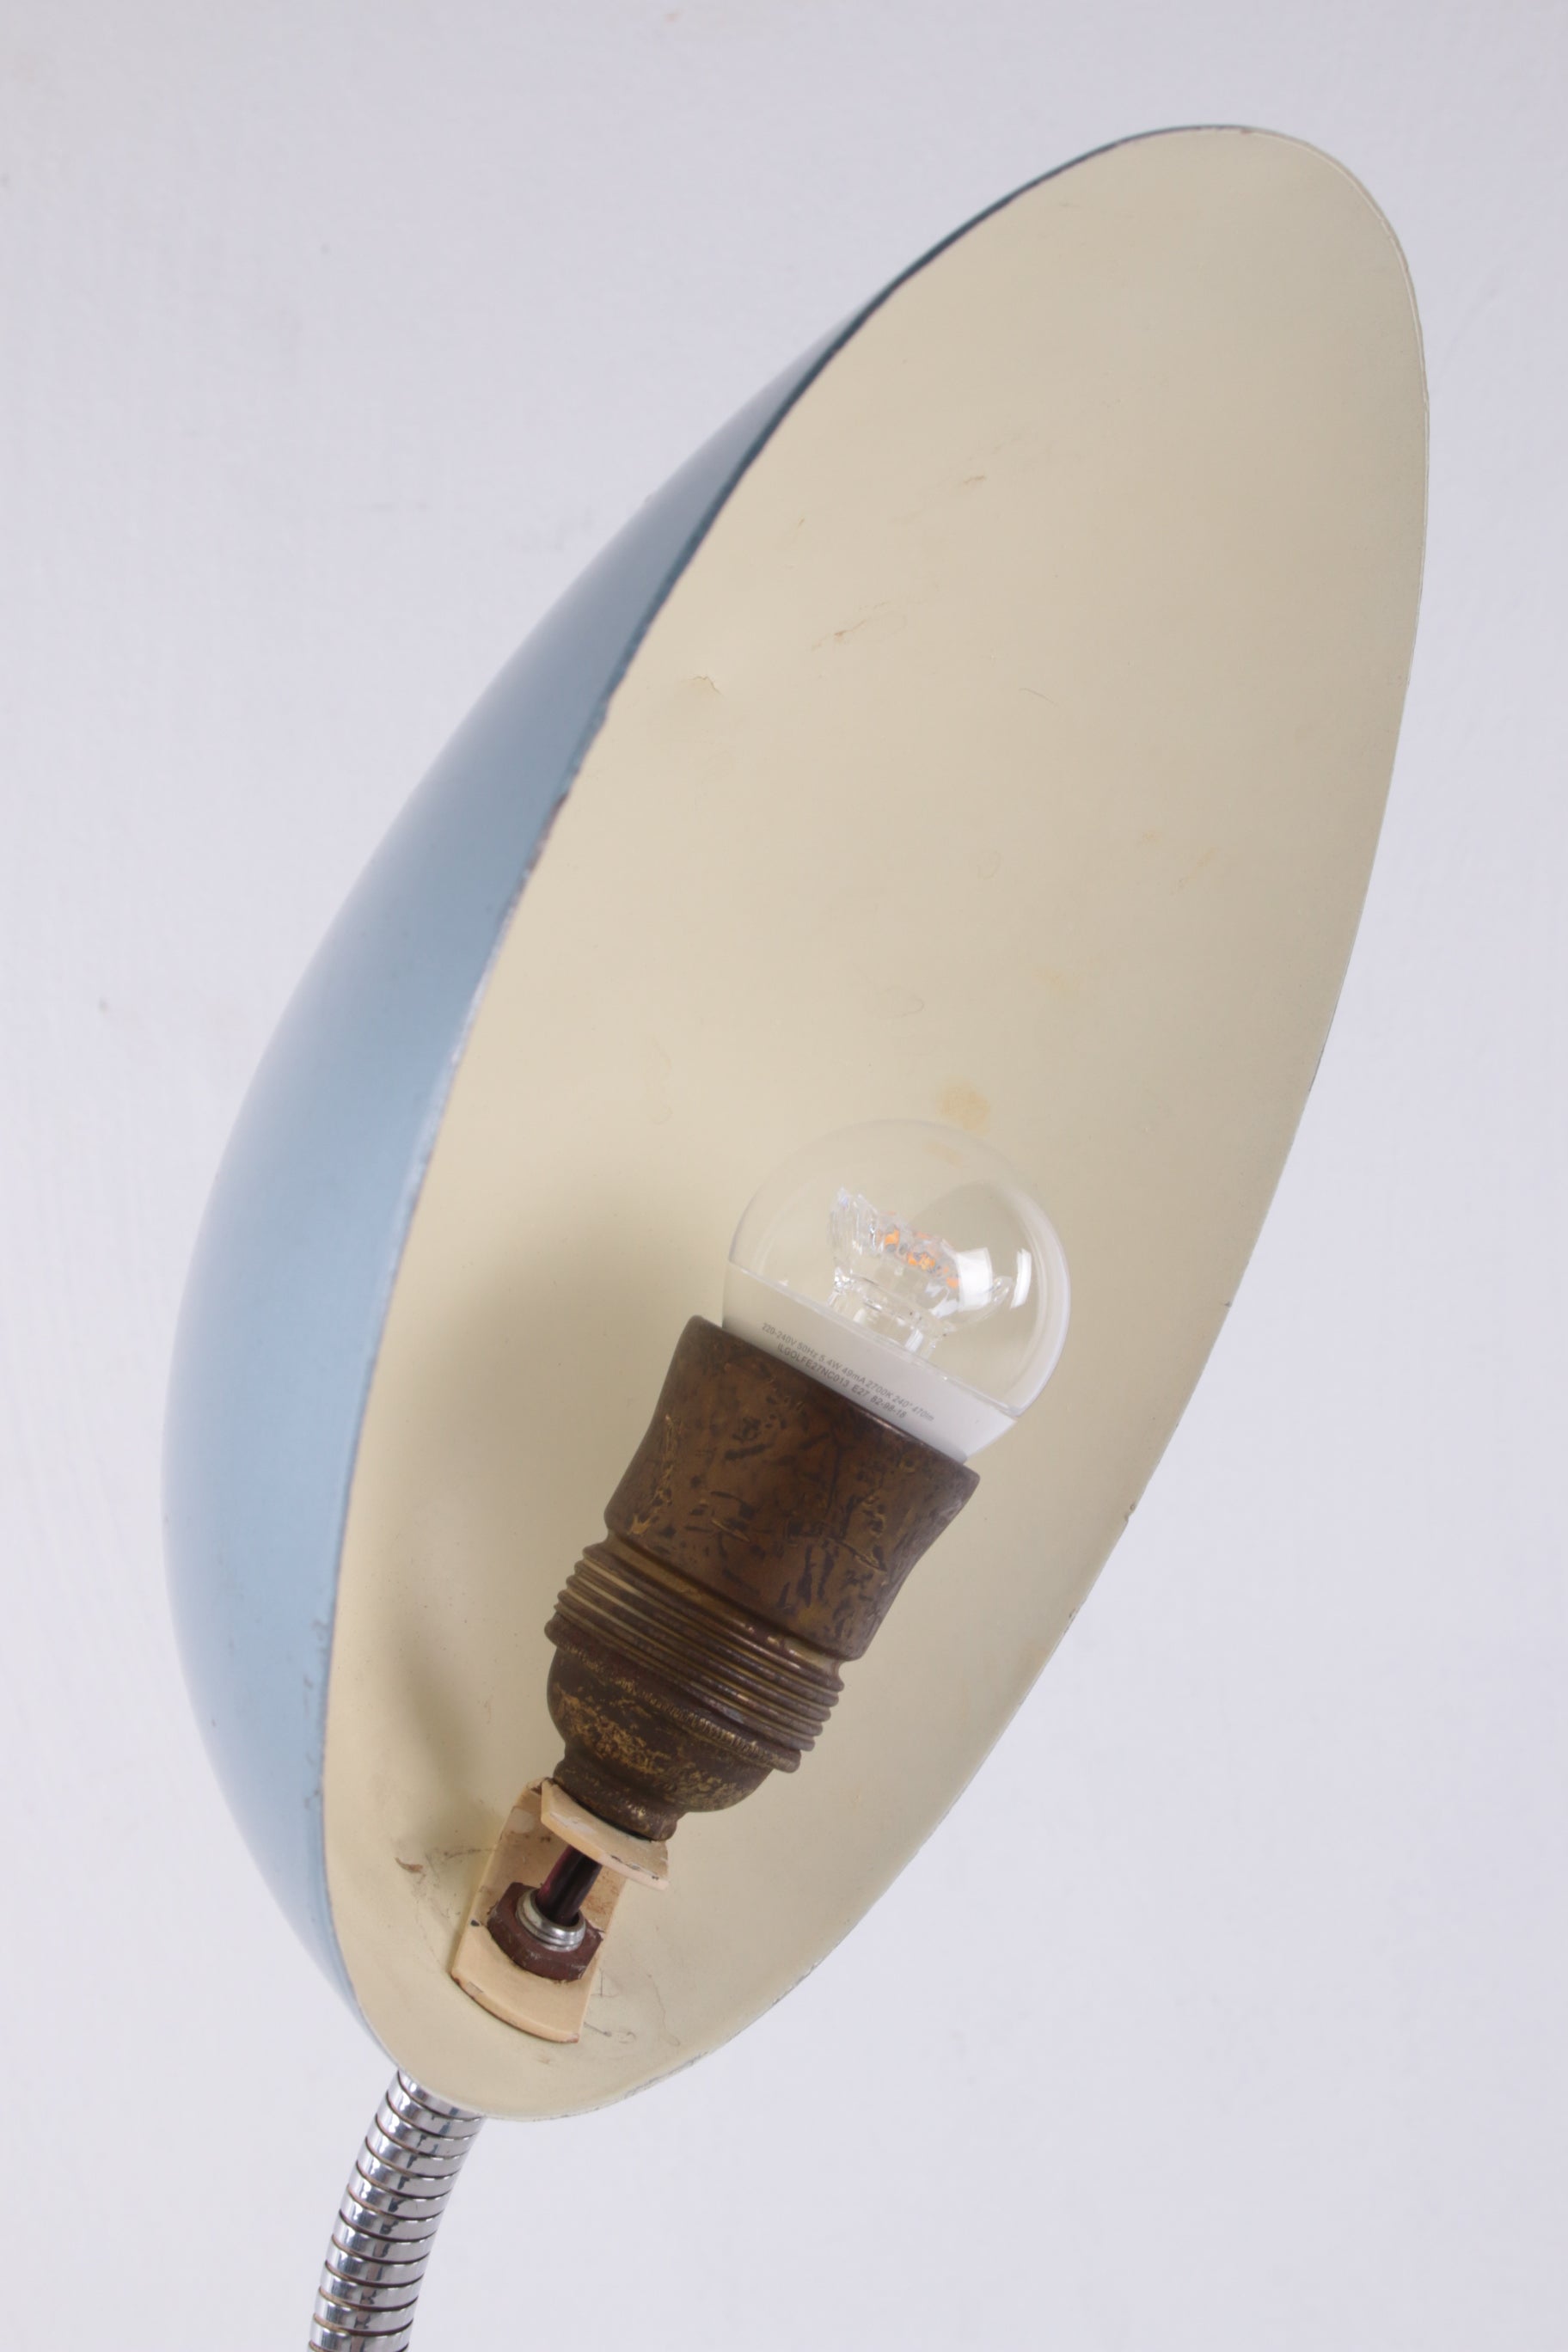 Bureau lamp Greta Grossmann 50 jaren detail onderkant lamp